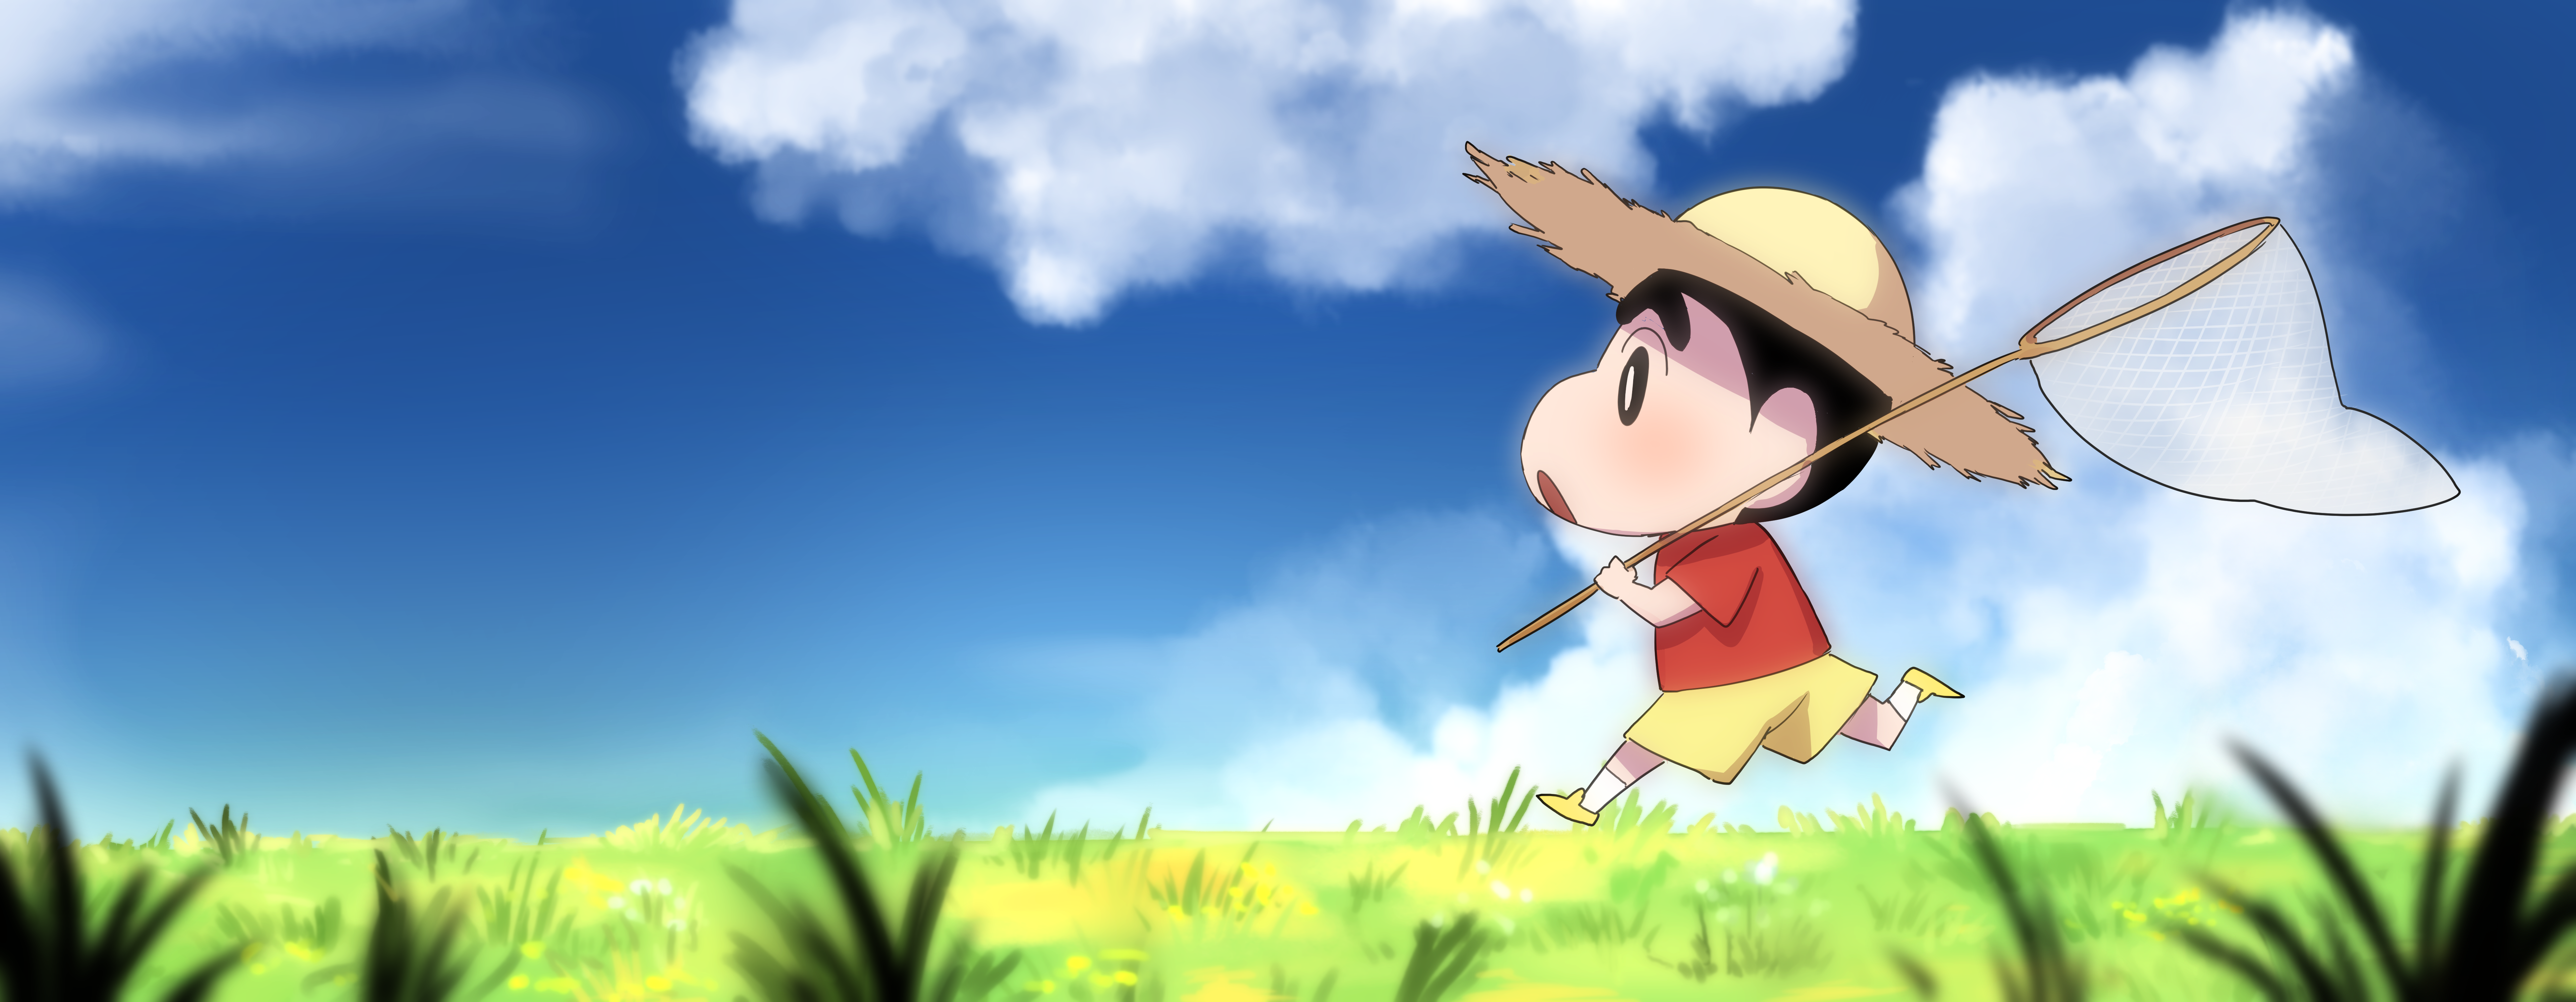 10+ Anime Crayon Shin-chan HD Wallpapers and Backgrounds